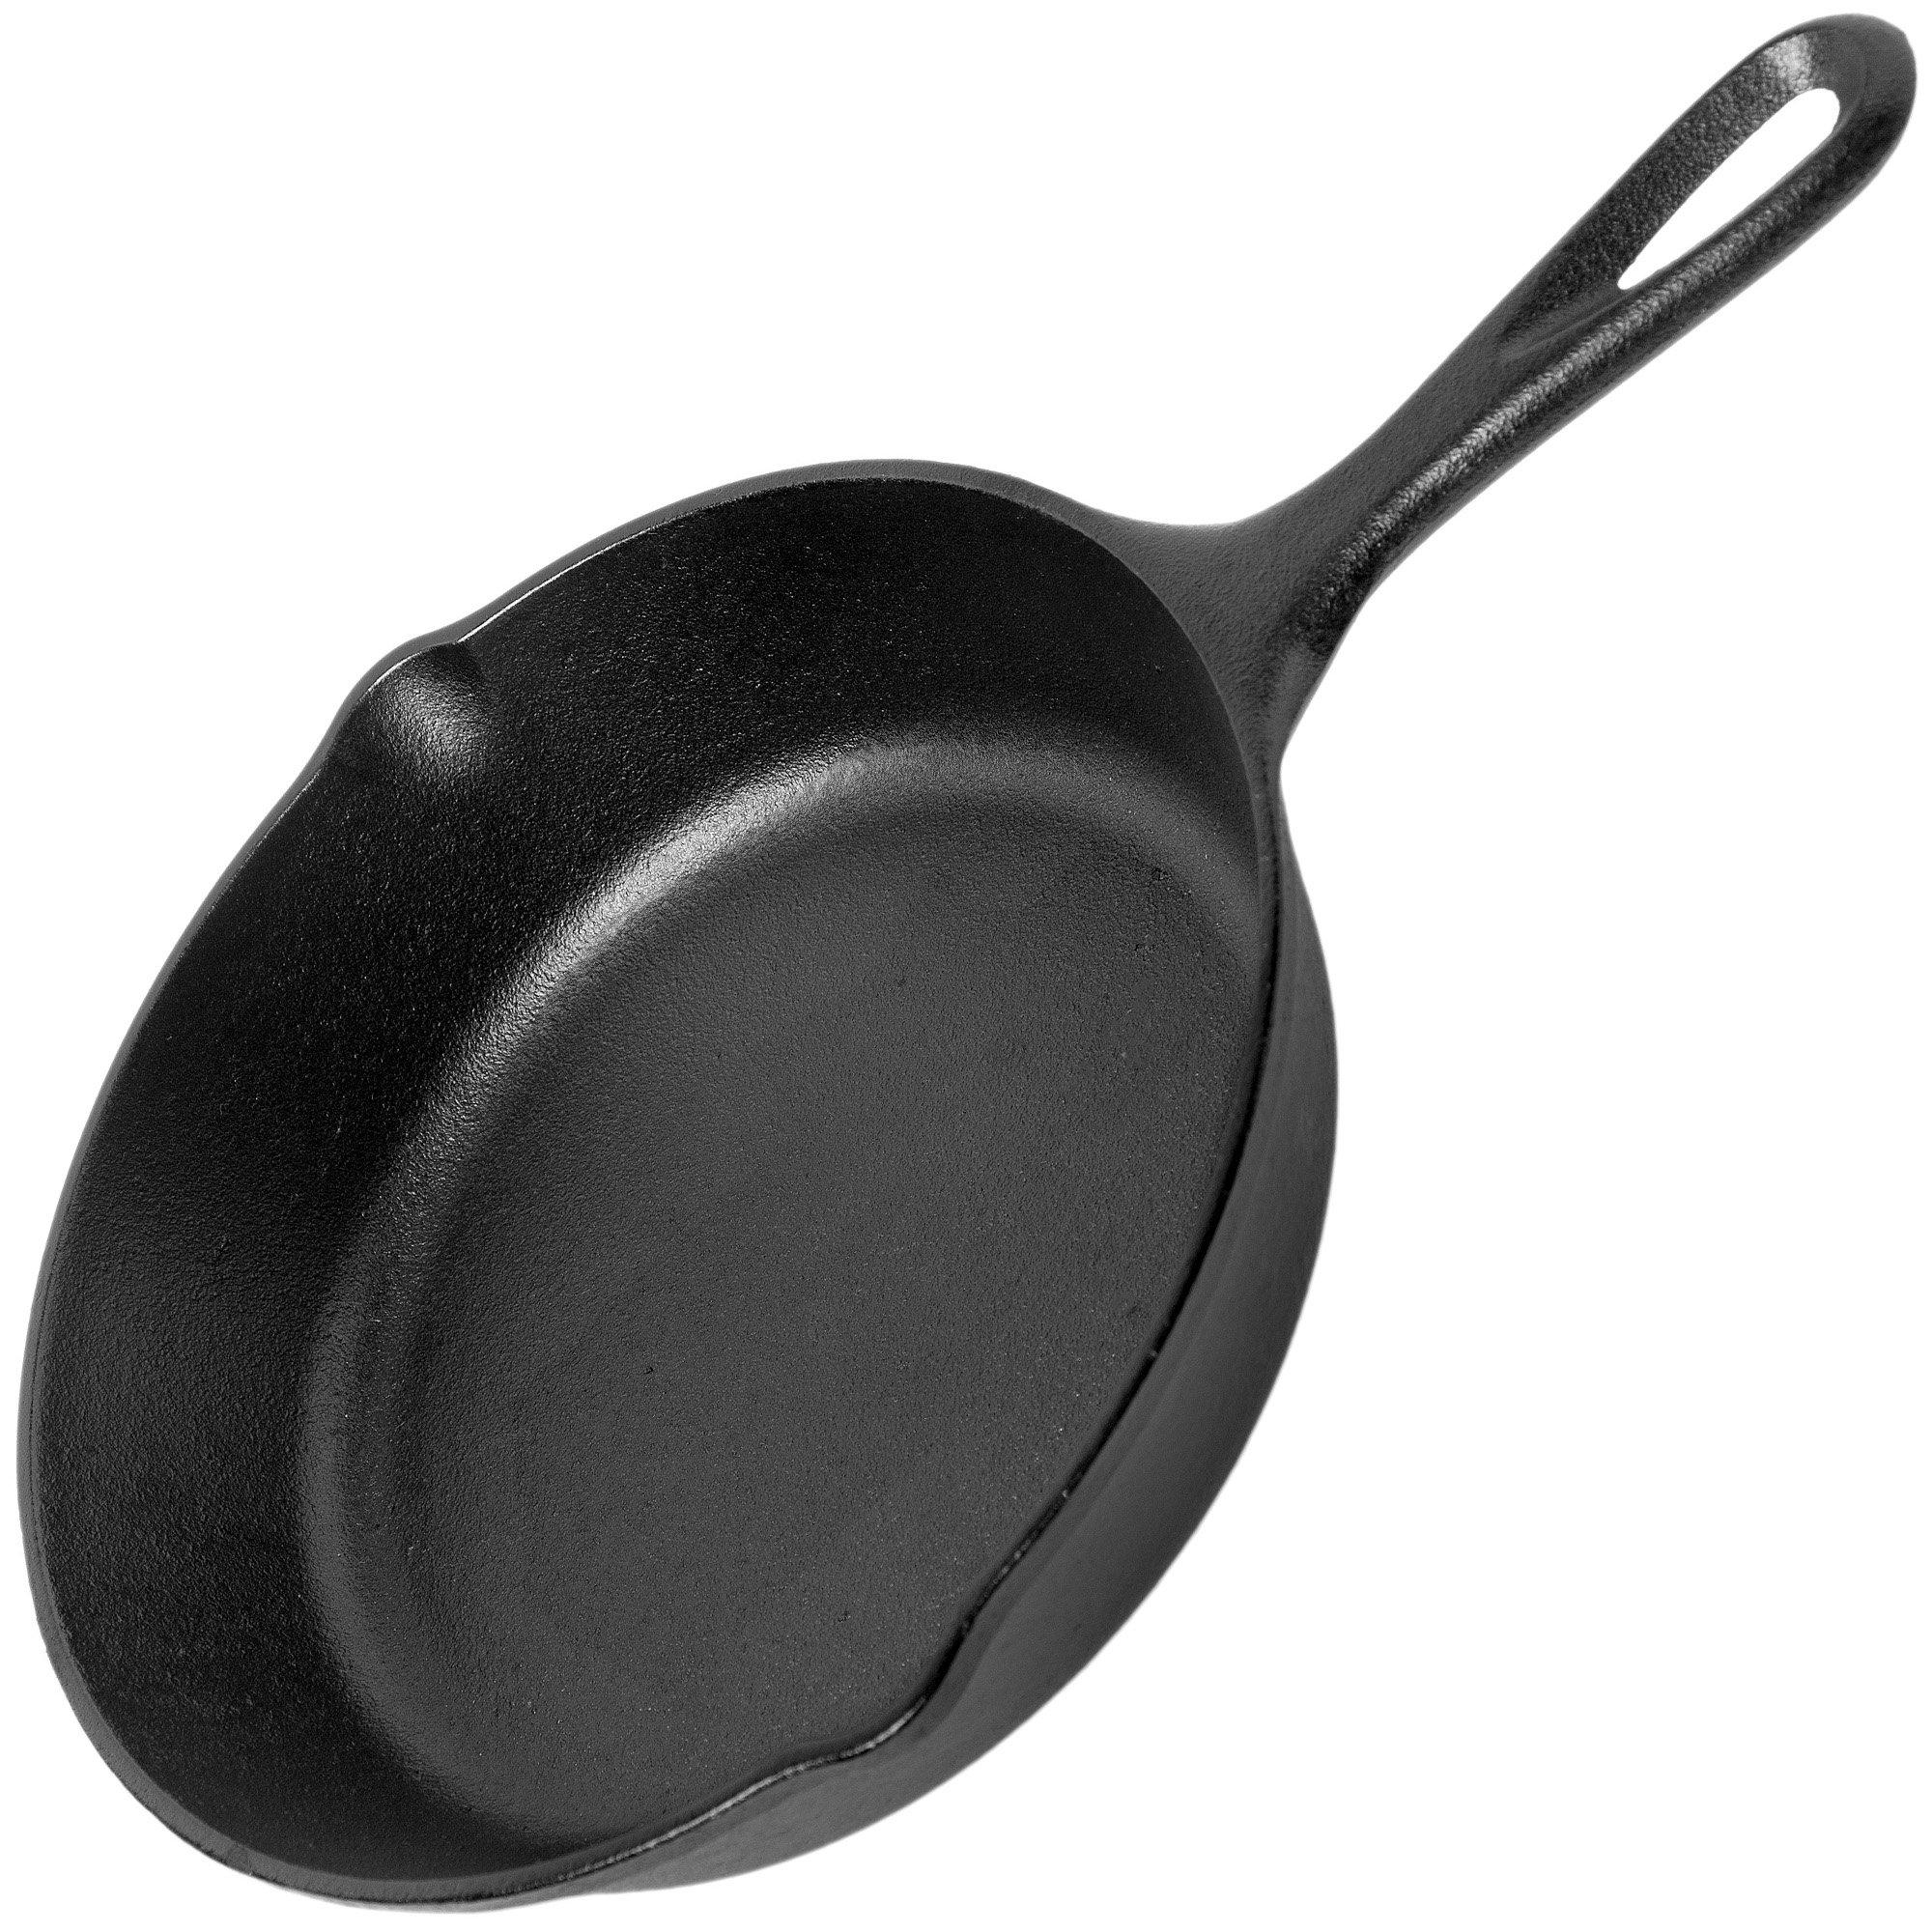 Lodge Classic Cast Iron frying pan L12SK3, diameter approx. 35 cm